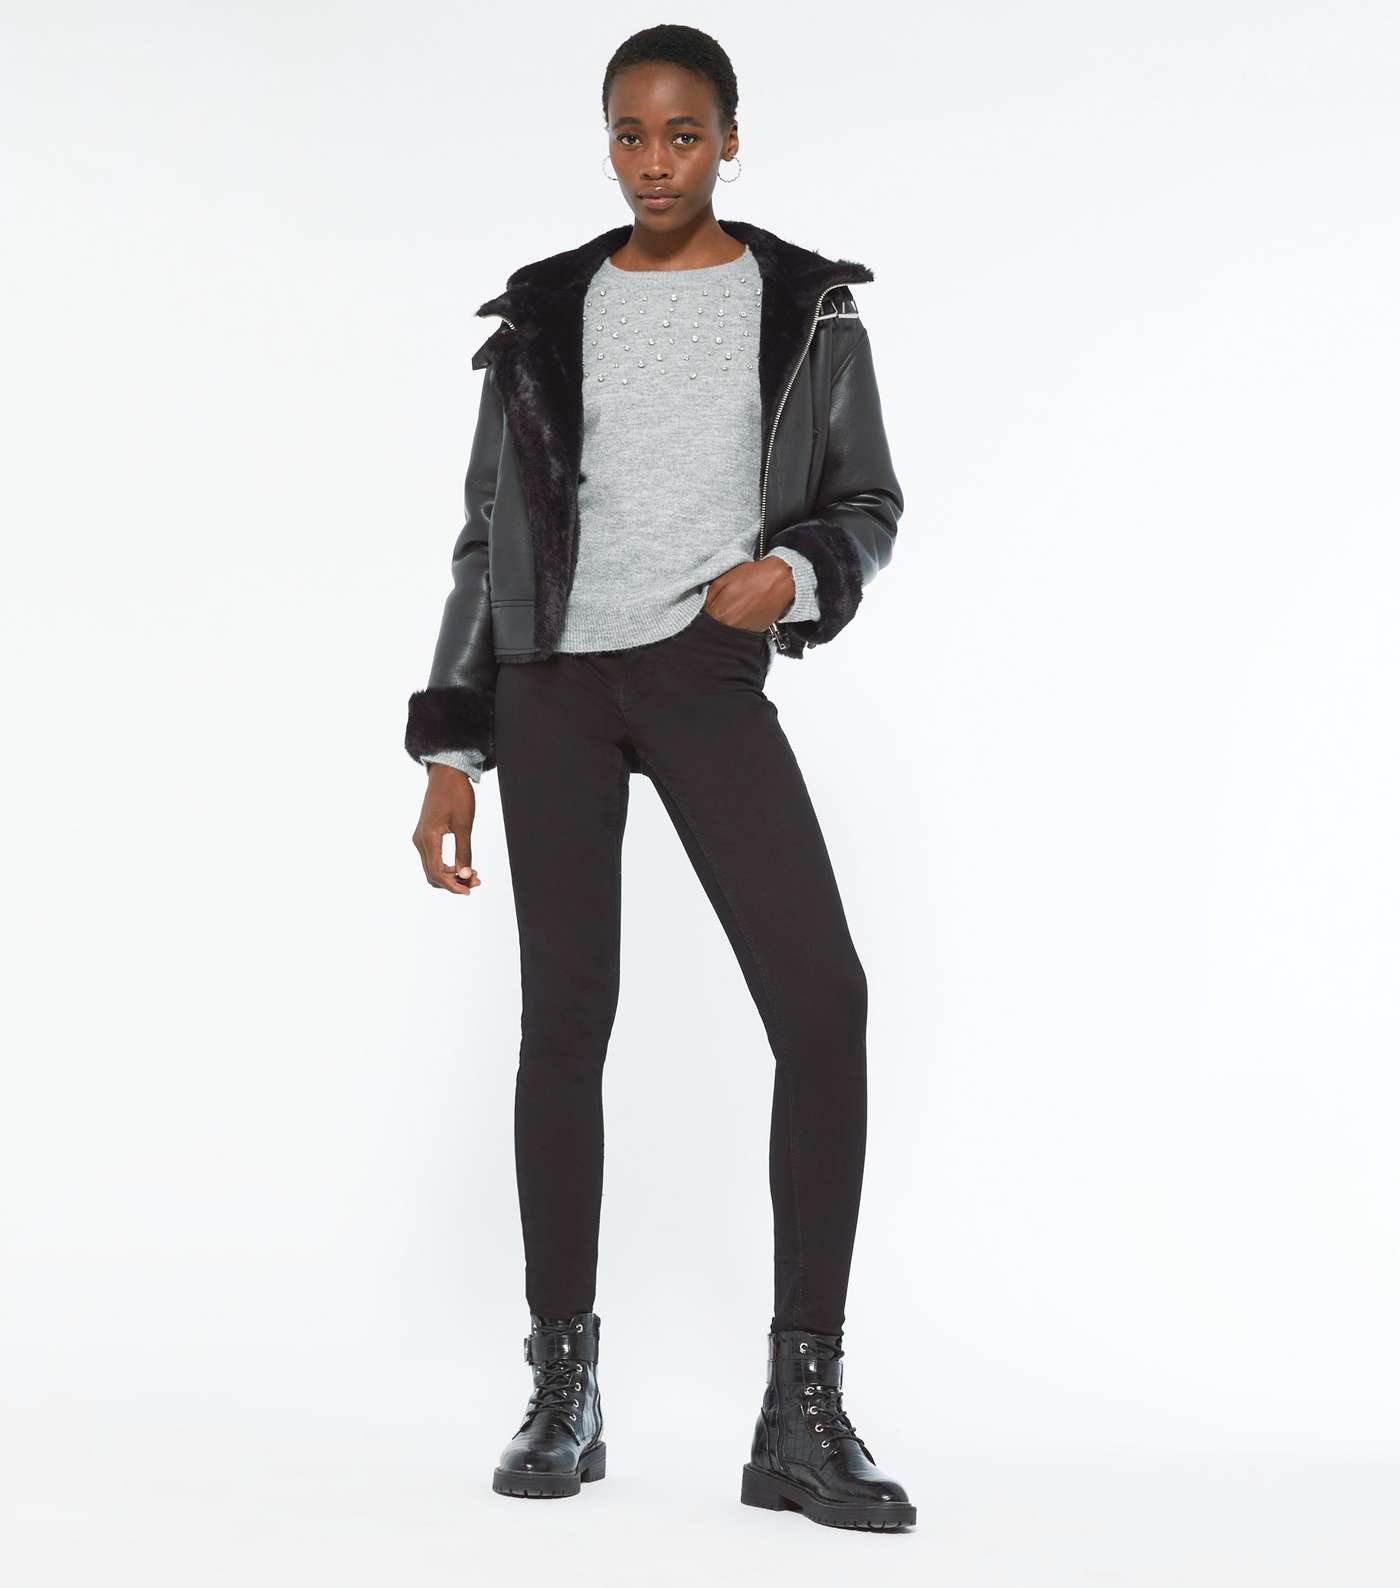 Tall Black Lift & Shape Jenna Skinny Jeans